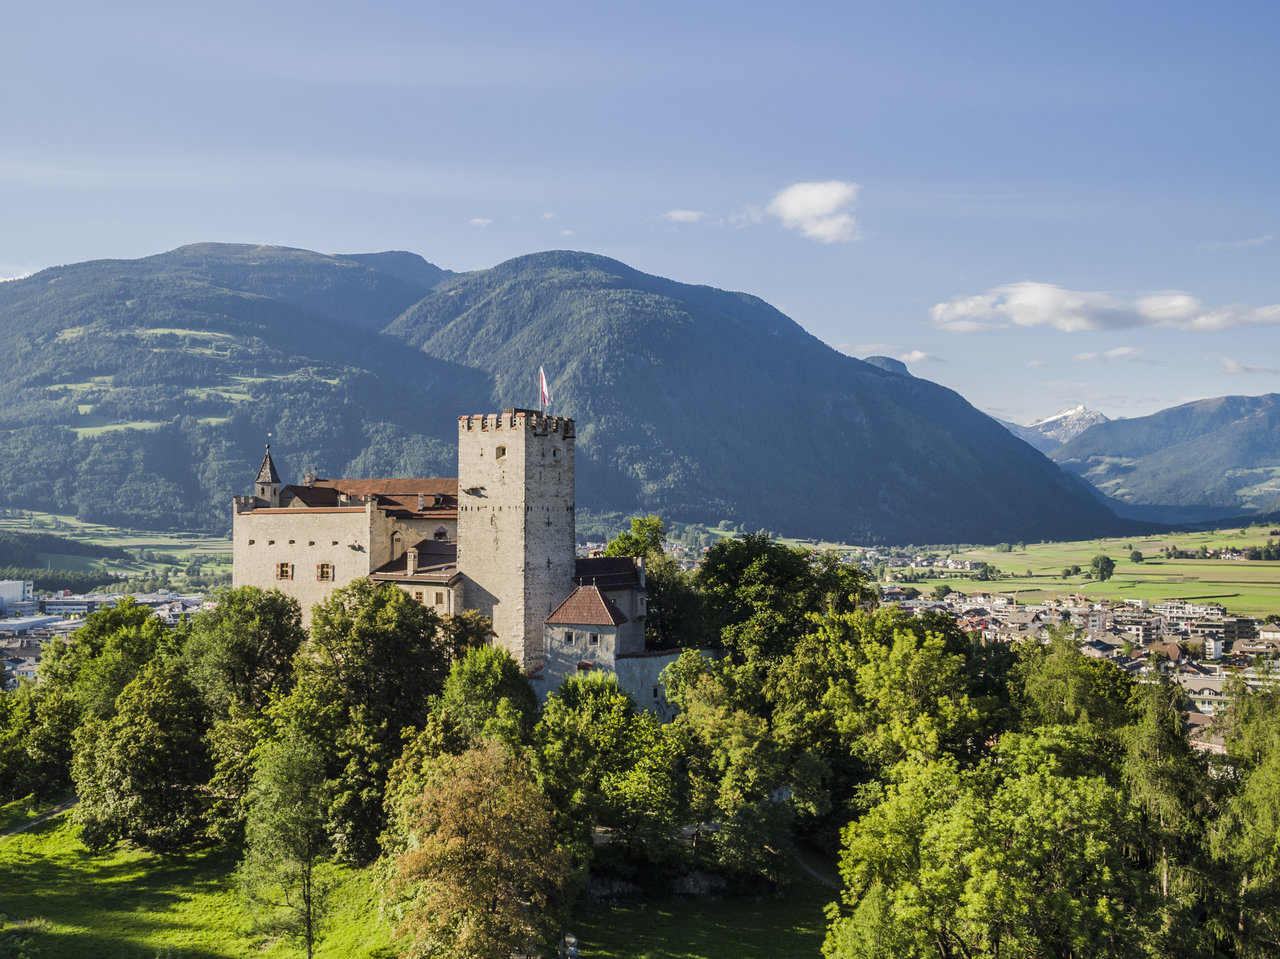 Castle Bruneck/Brunico